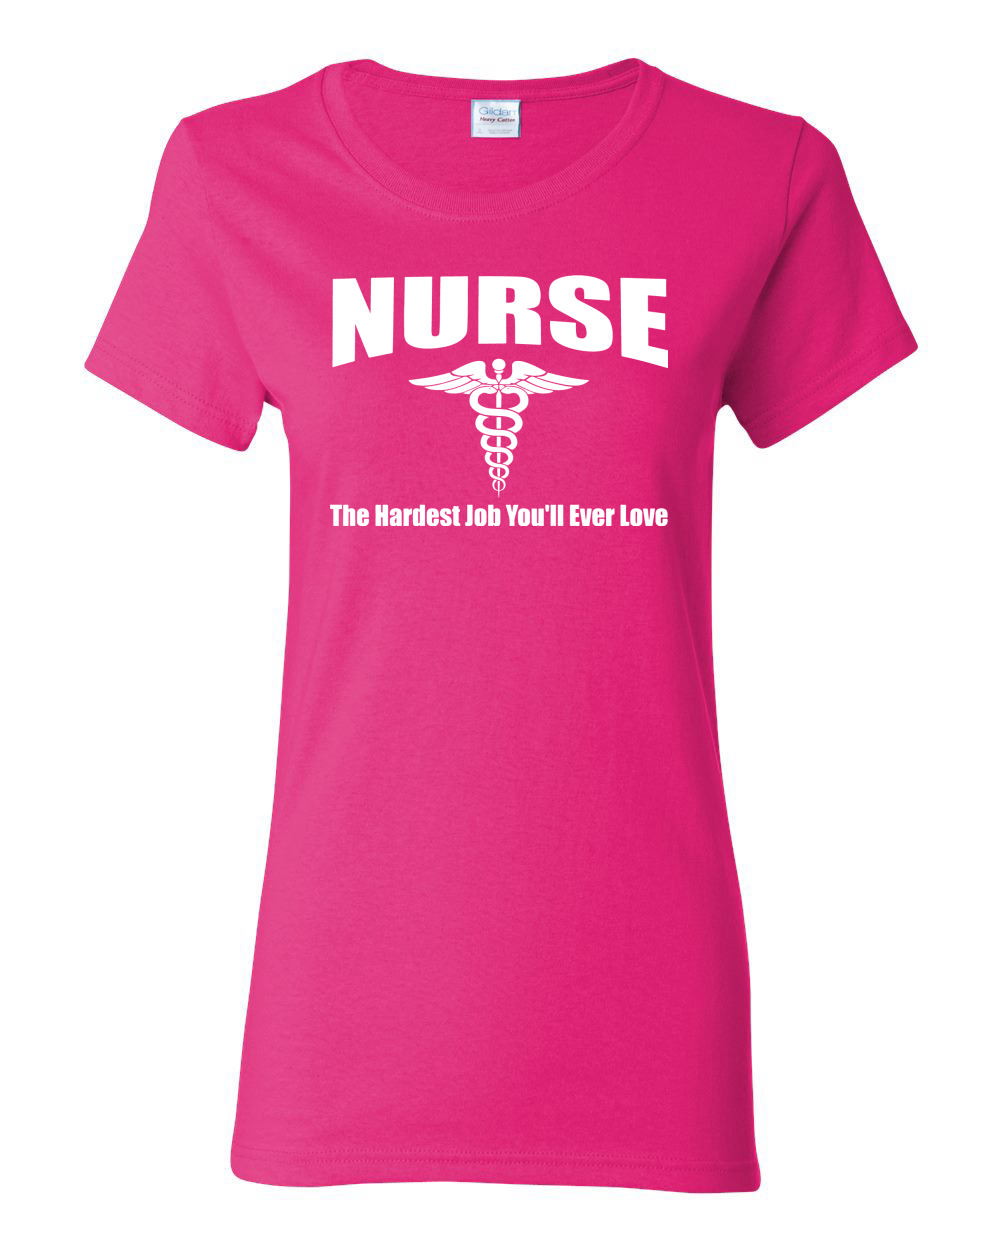 Nurse the Hardest Job You'll Ever Love | Womens Pop Culture Graphic T-Shirt, Fuschia, X-Large - image 1 of 3